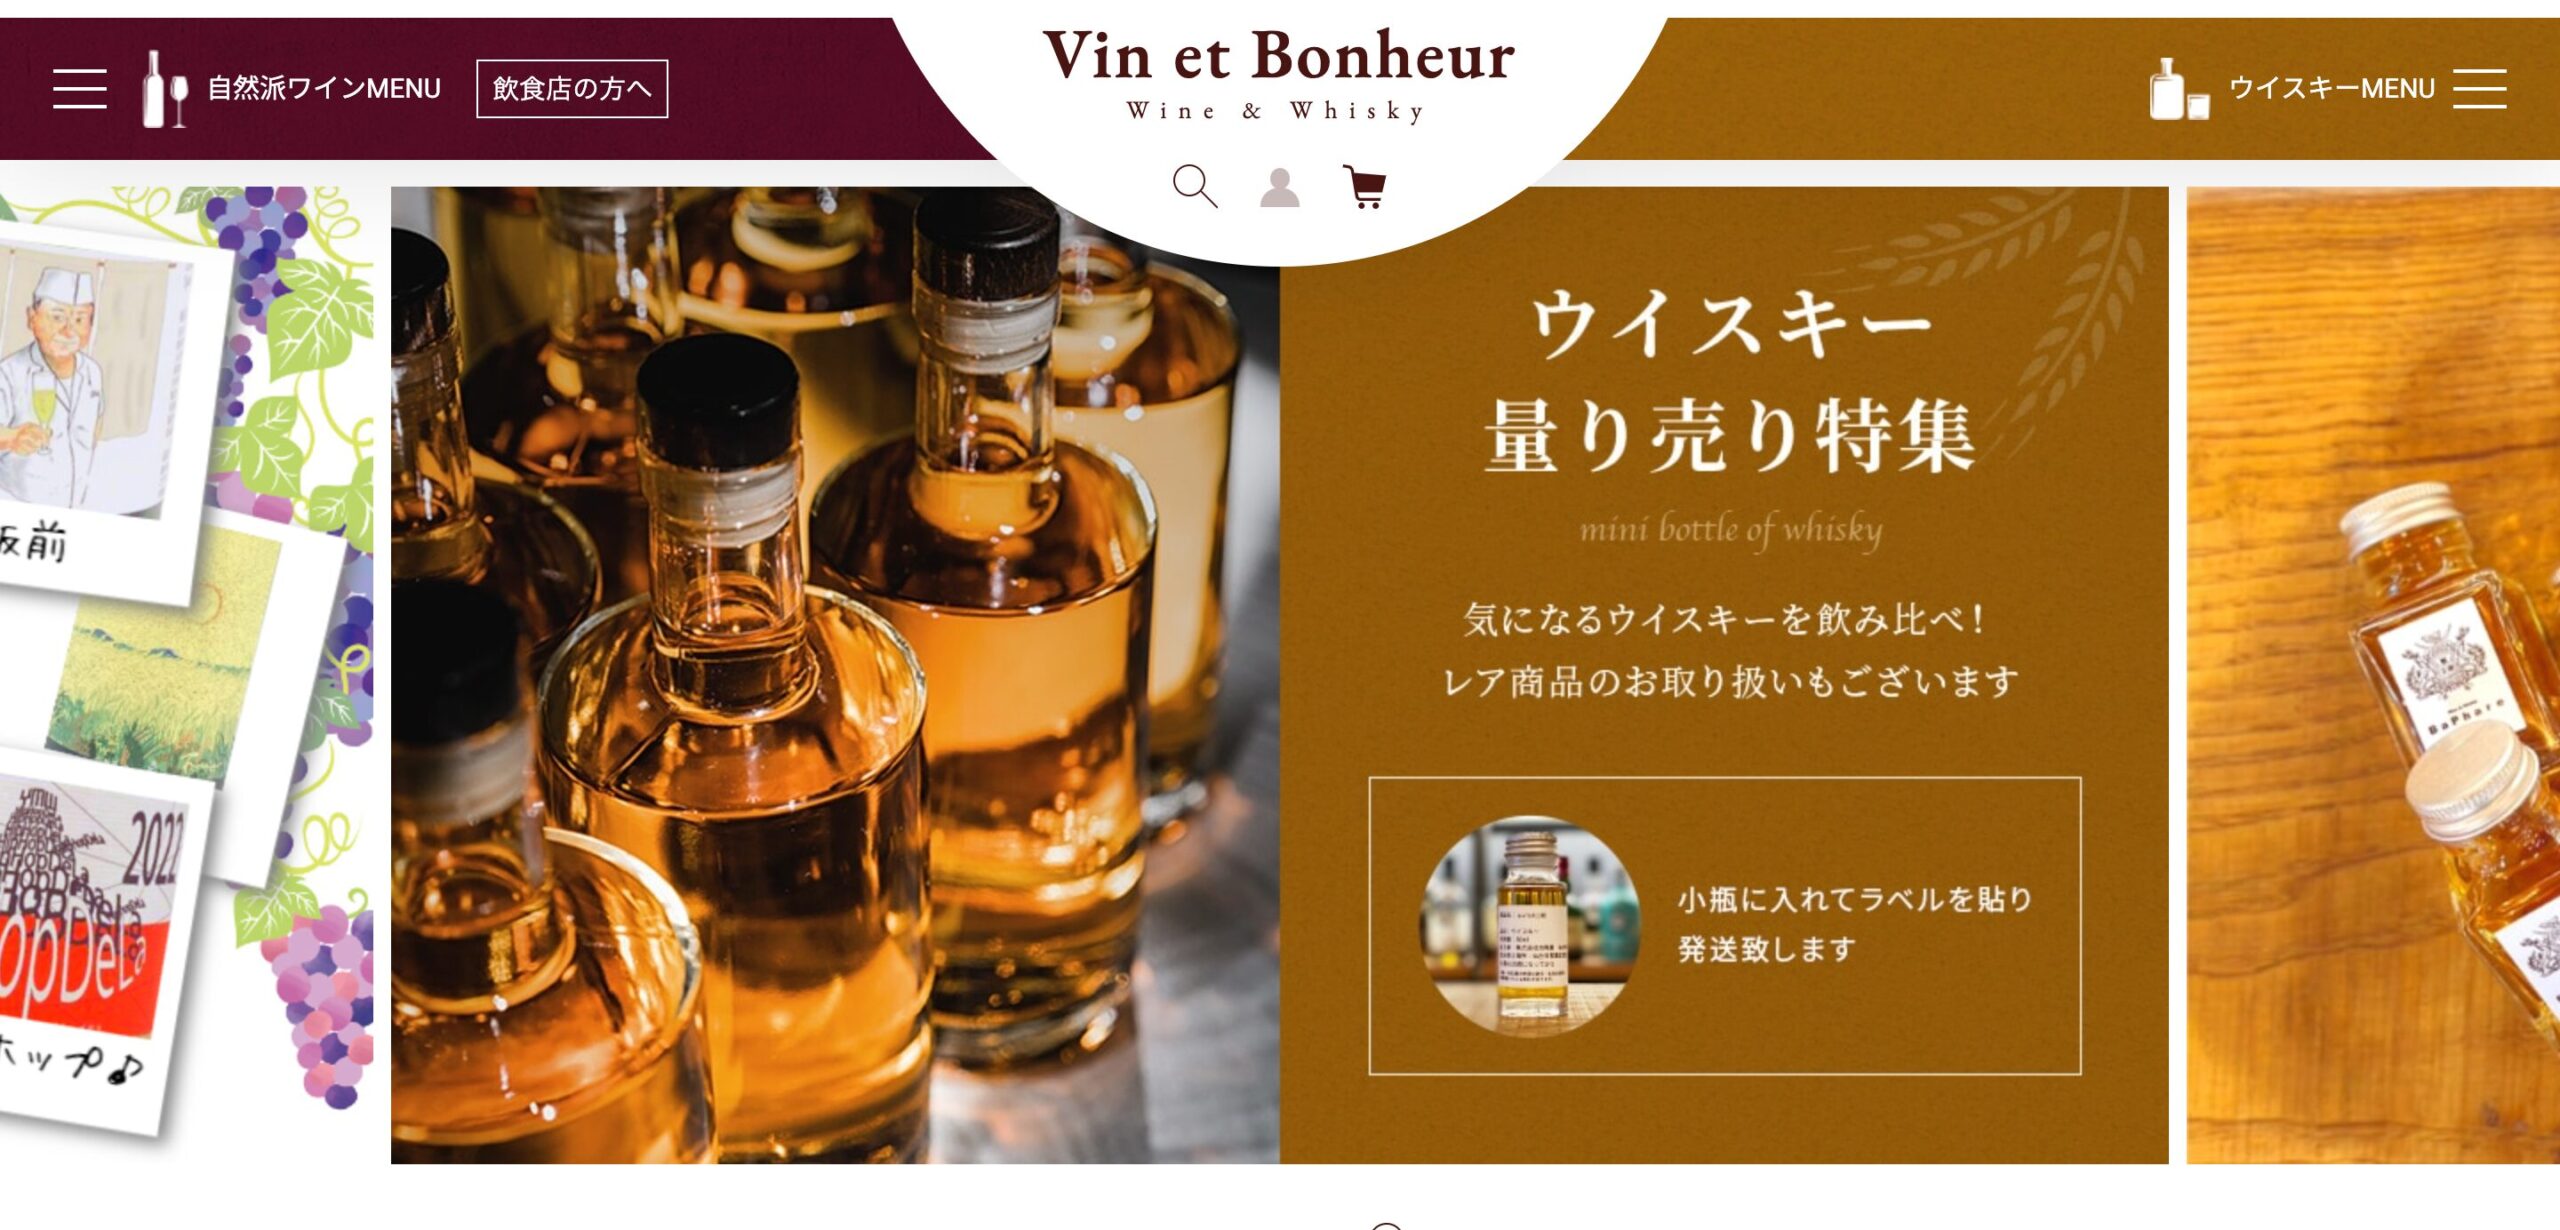 「Vin et Bonheur」トップページ